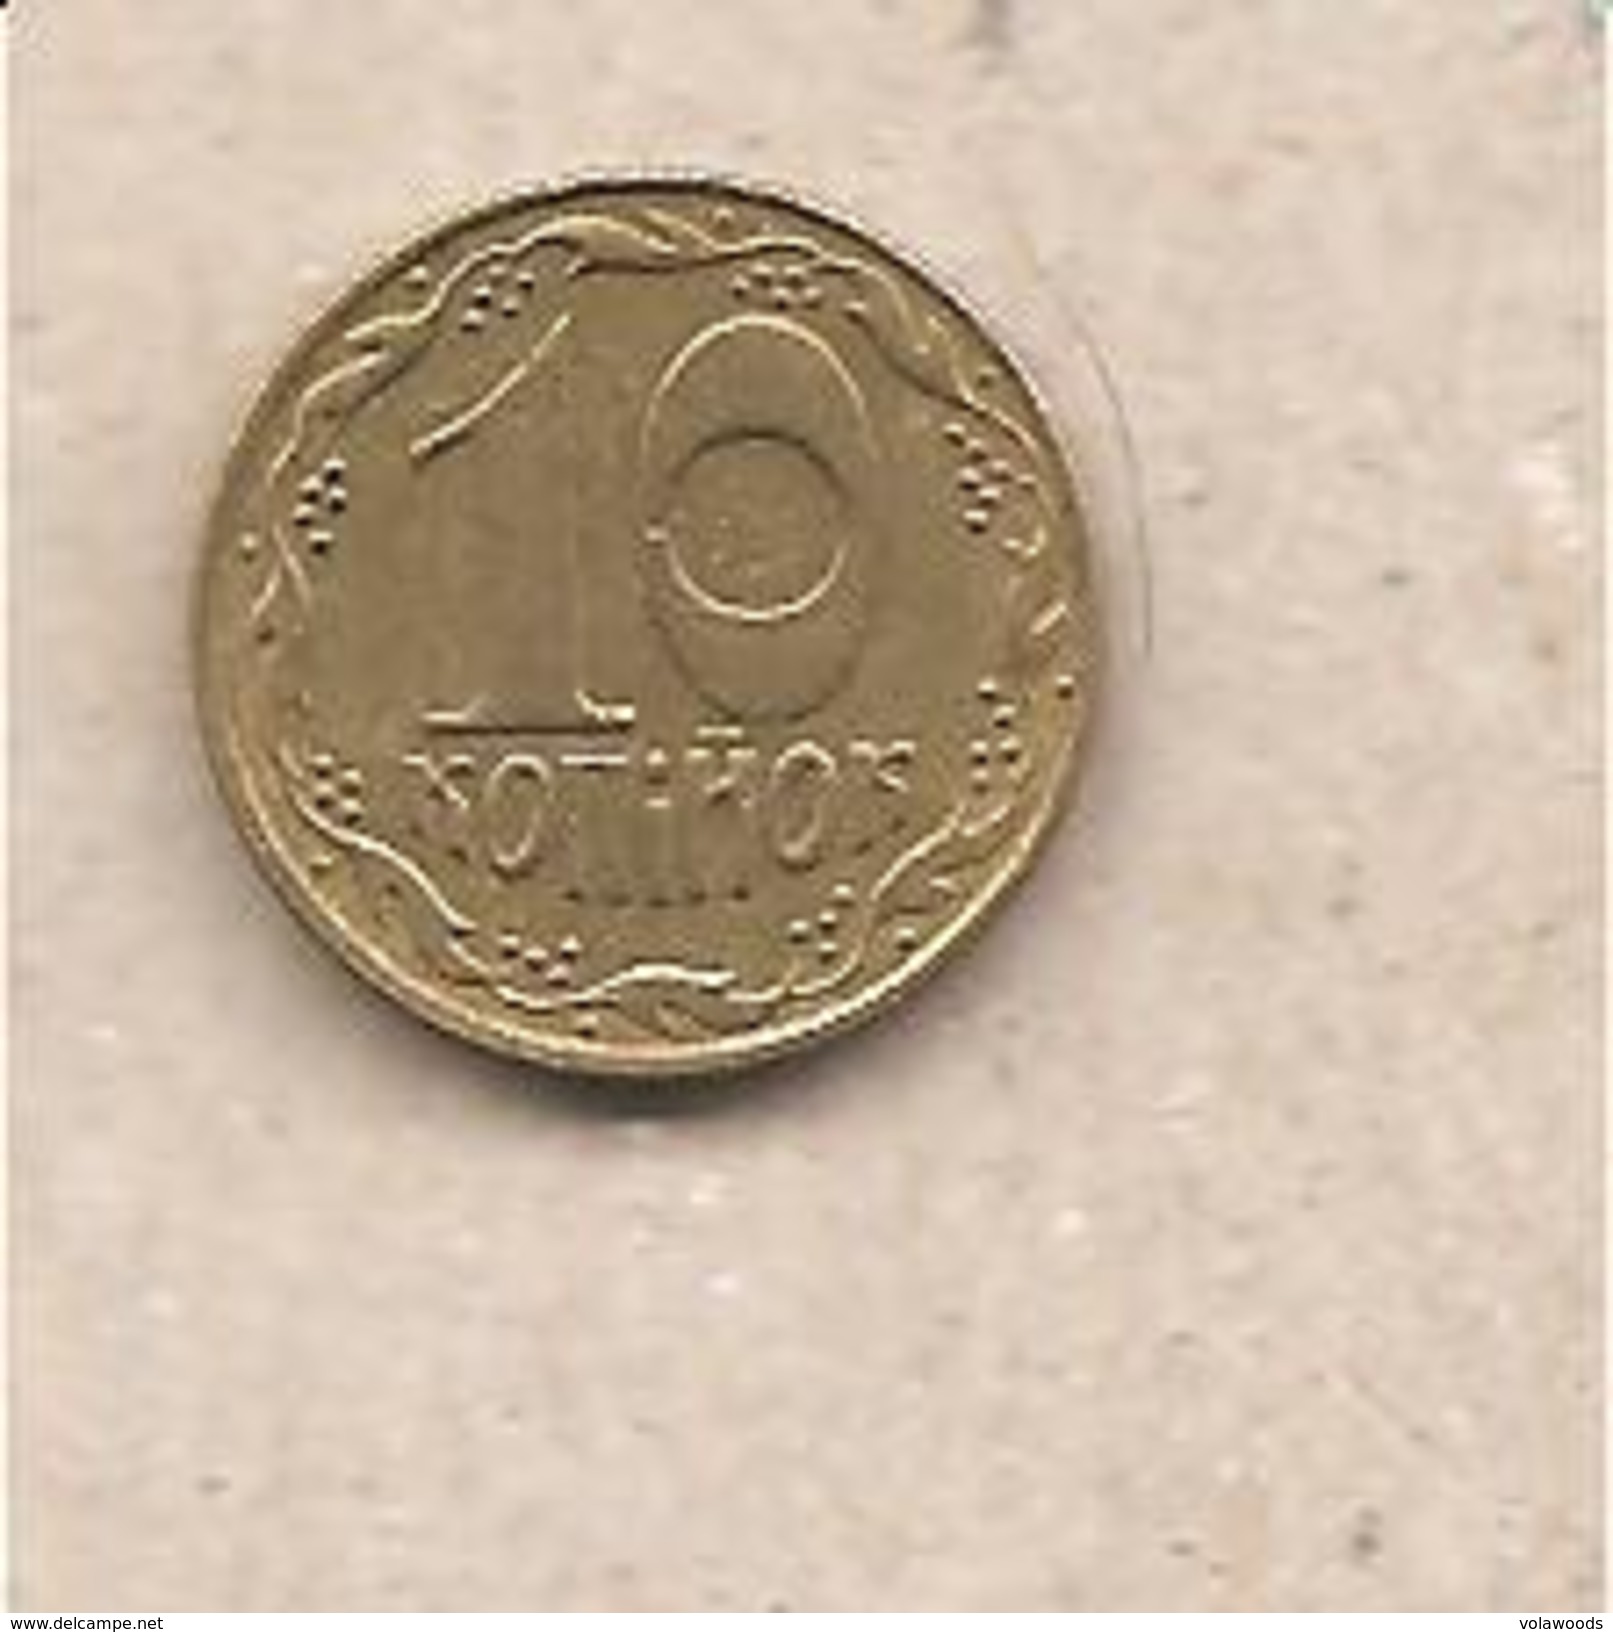 Ucraina - Moneta Circolata Da 10 Kopiyka "4 Frutti Di Bosco" - 1992 - Ucraina